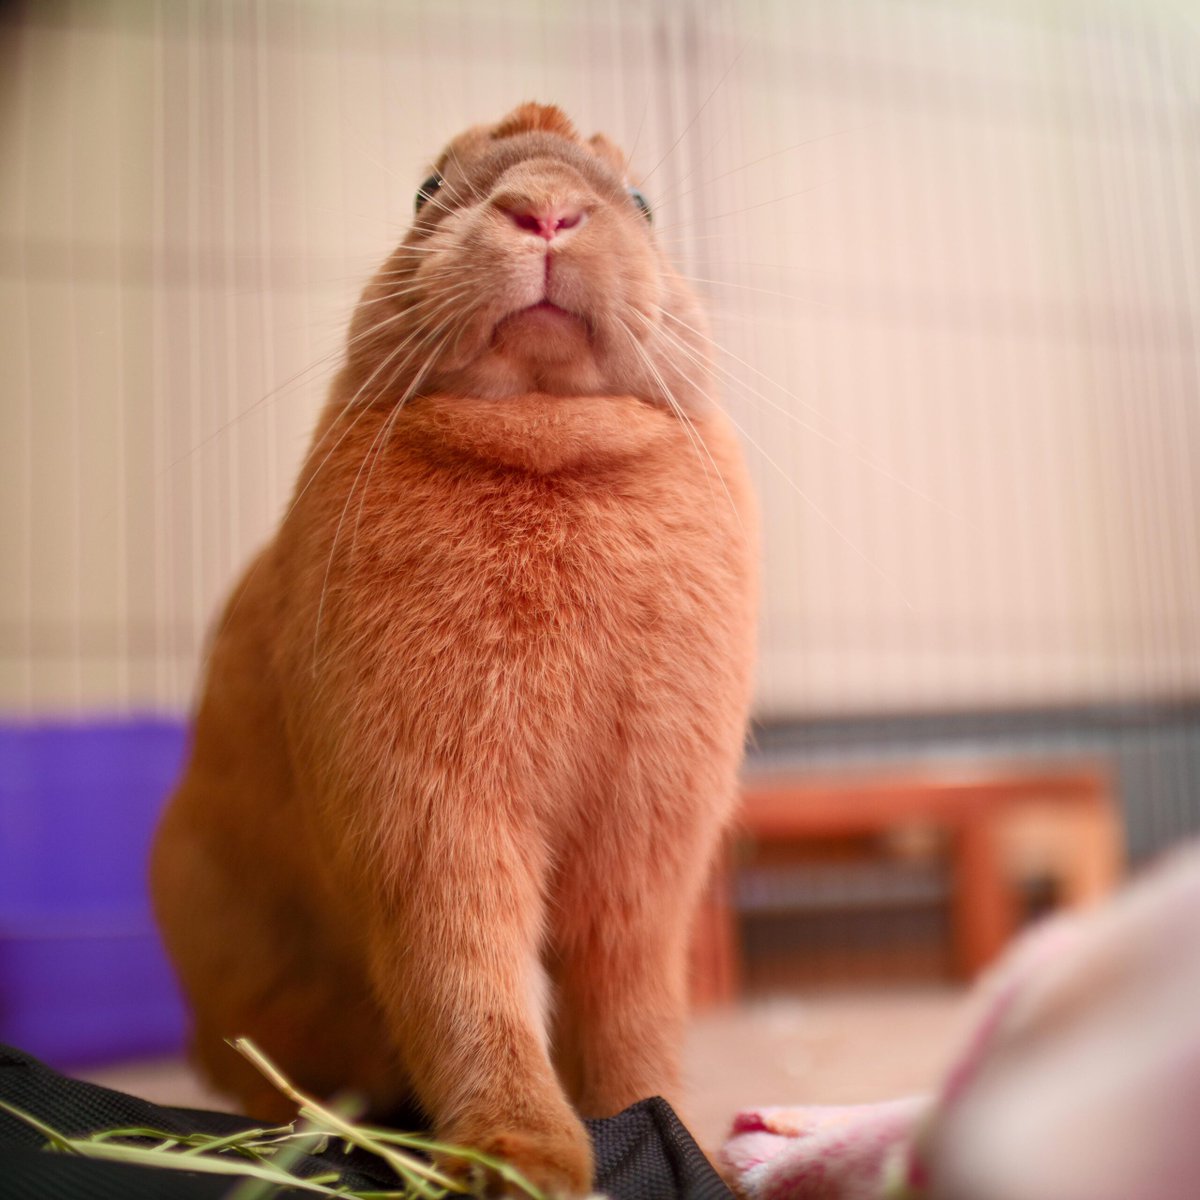 Behold! The noble bunny queen demands snak... rabbitvideos.com/107243/behold-… #Rabbits